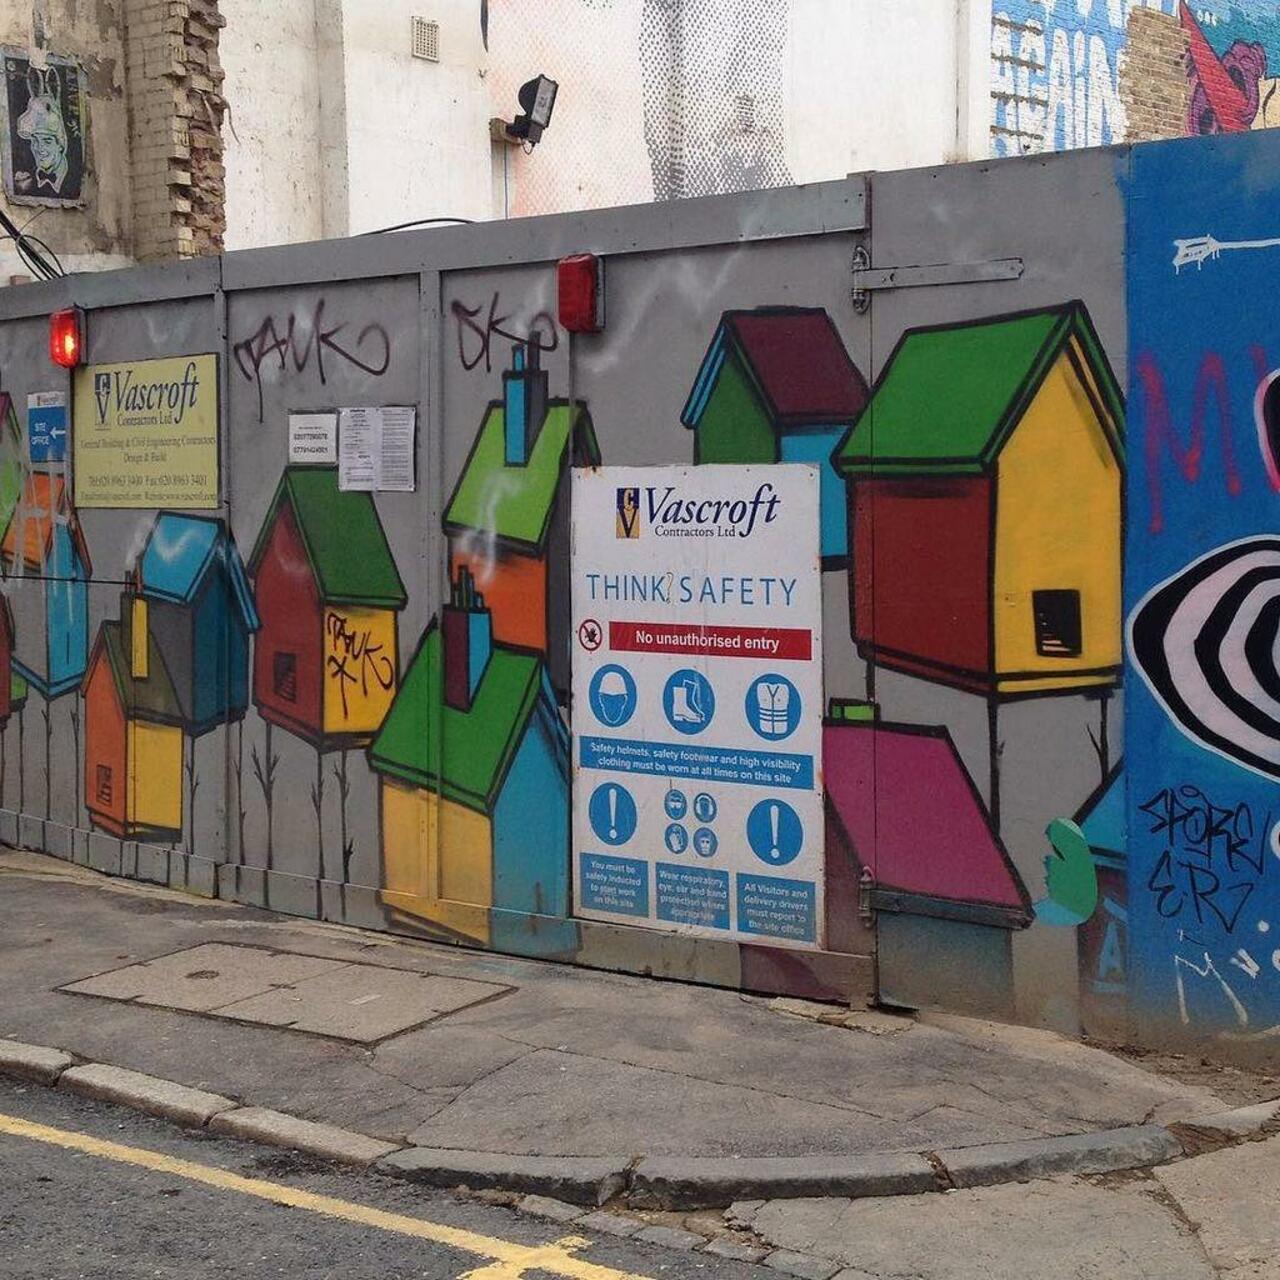 #streetart #graffiti #streetartlondon #london #thisislondon by isadarko http://t.co/SFcfZ8oCO6